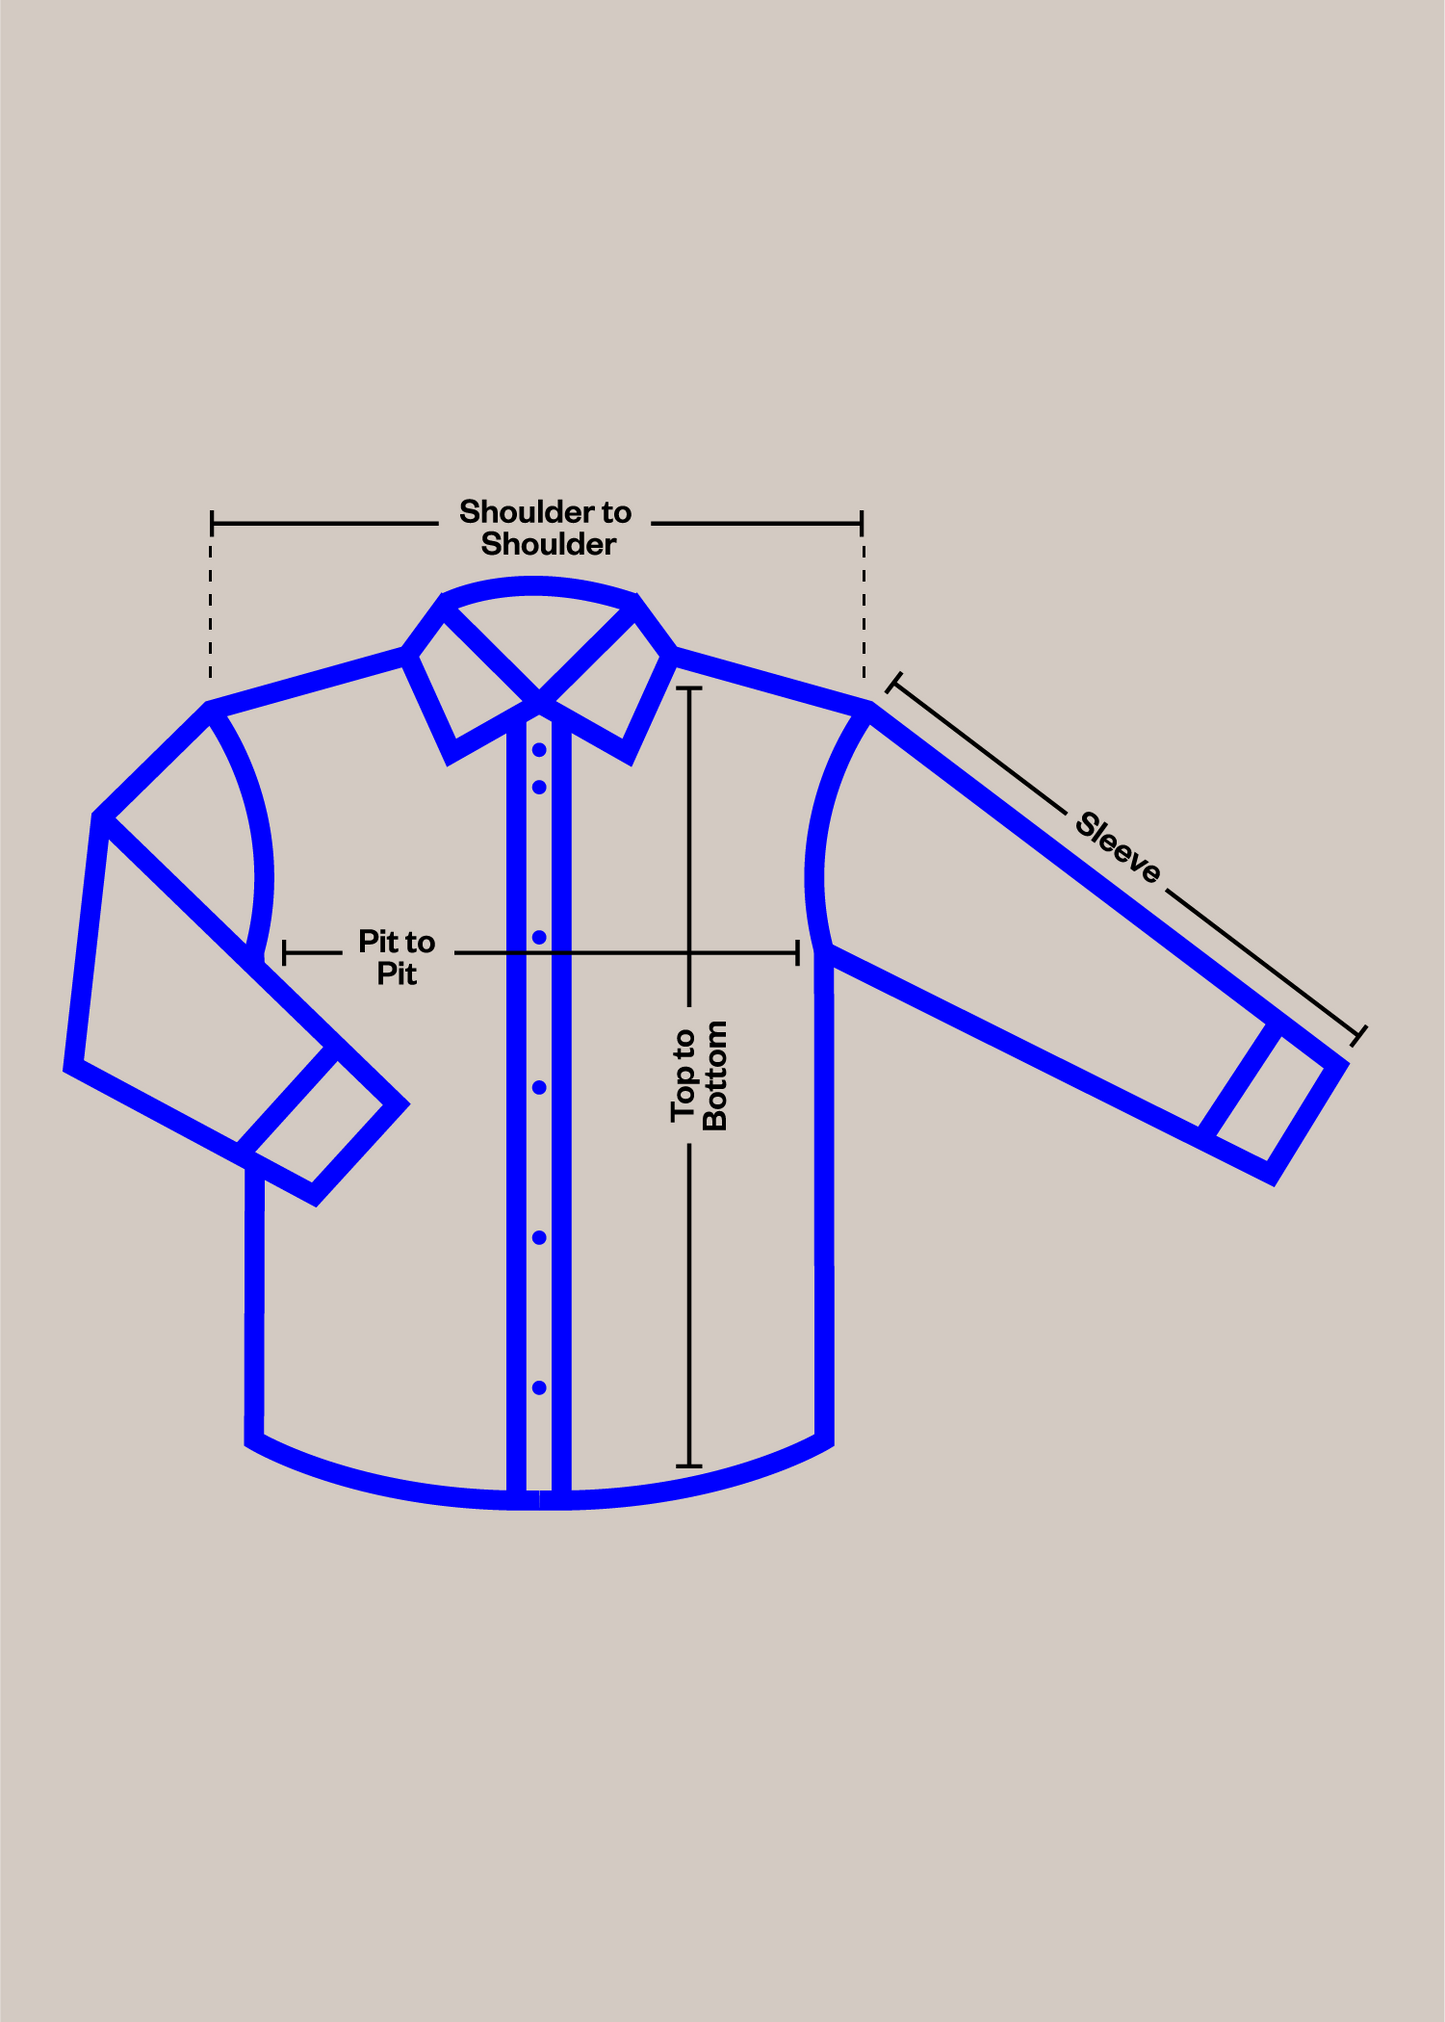 1980s European Workwear Chore Jacket Size XS/S